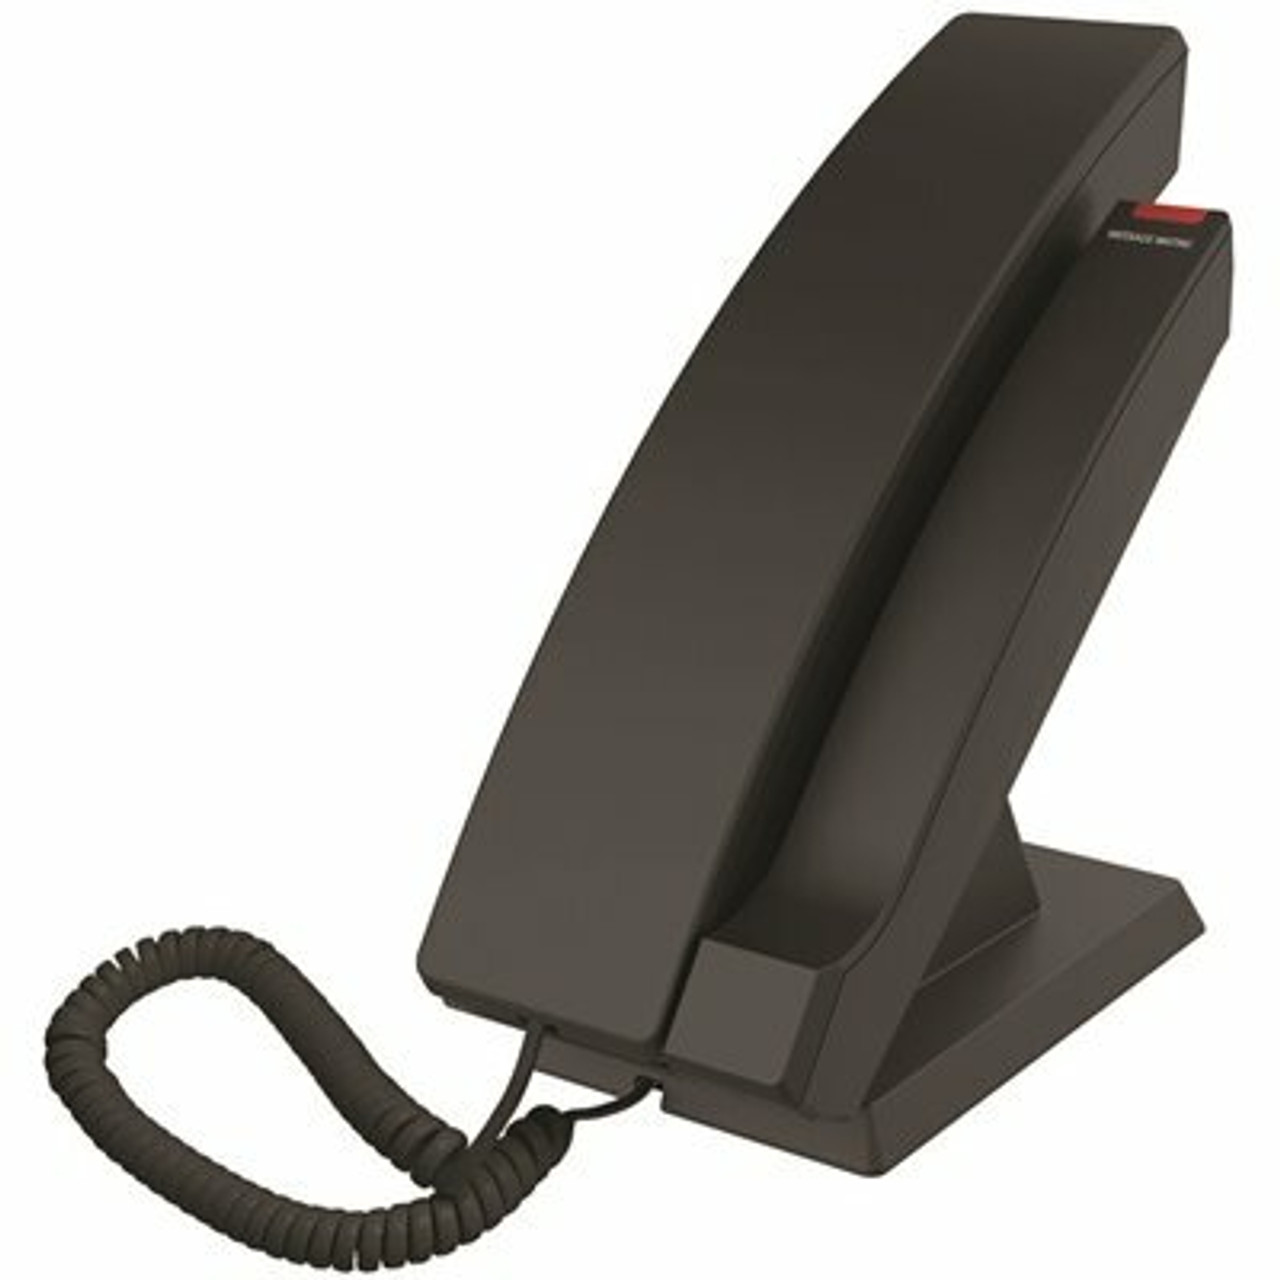 Vtech 1-Handset Corded Phone With Speakerphone